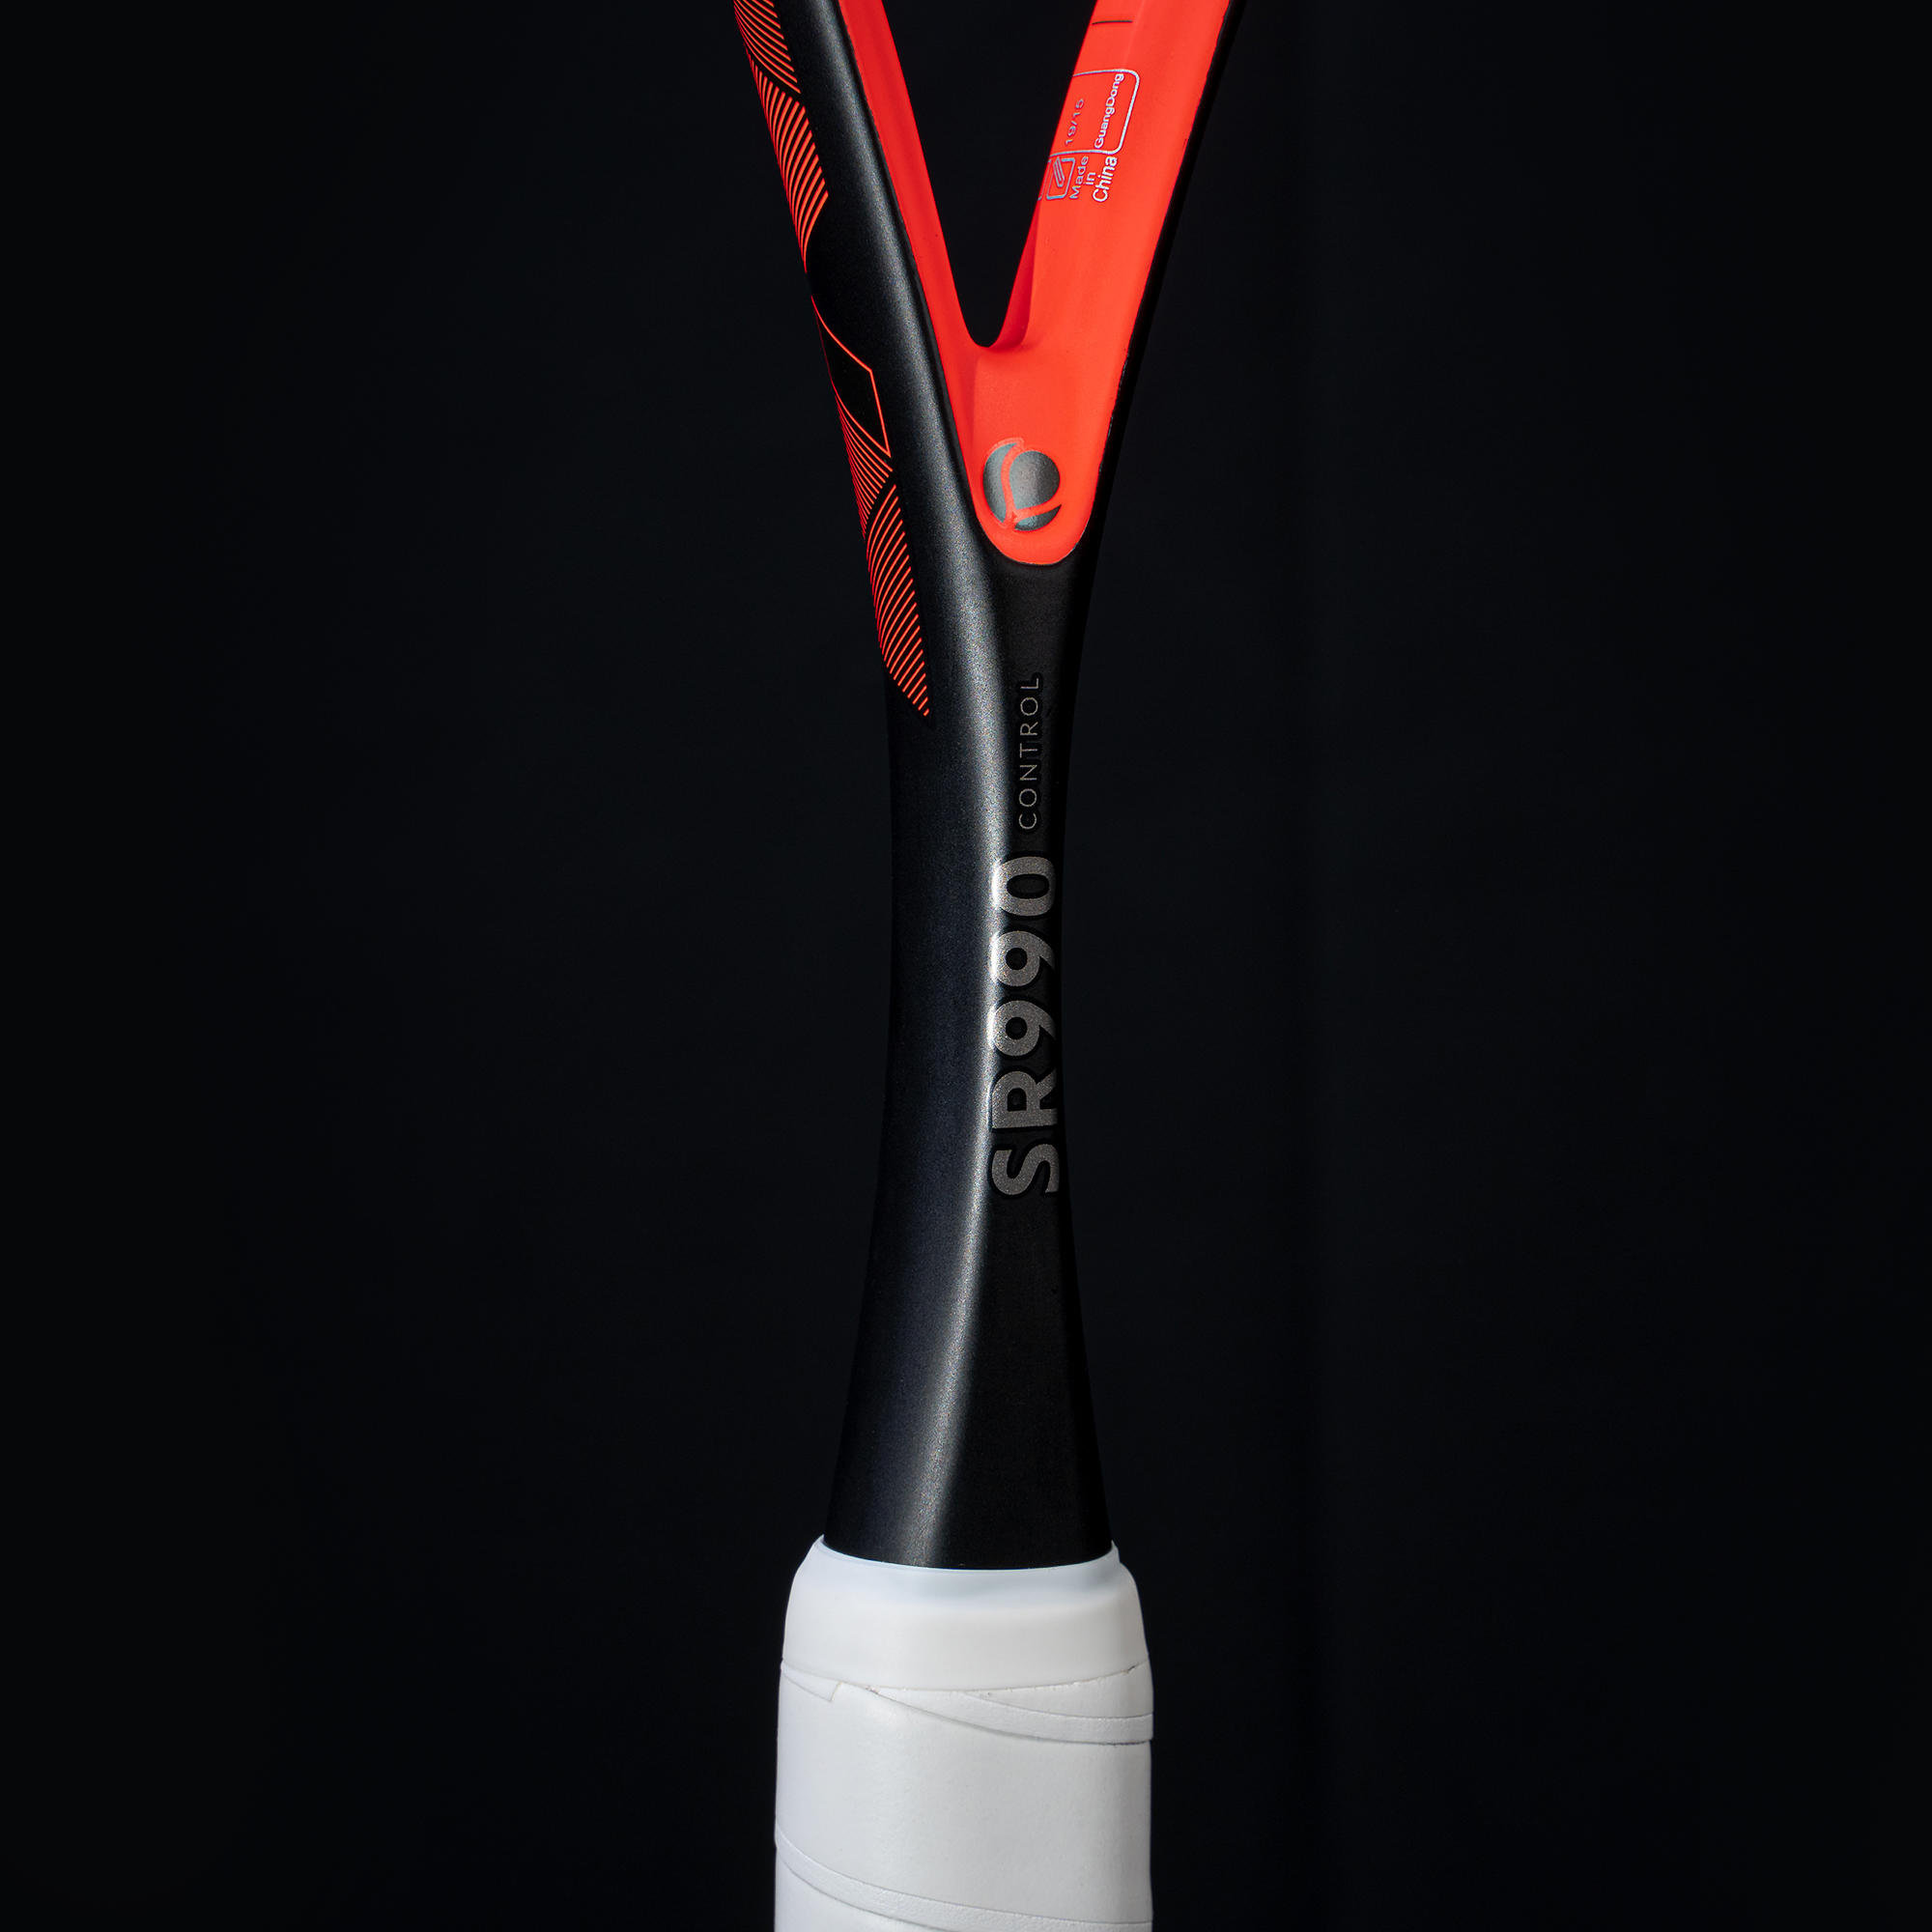 SR 990 Control Squash Racket - 120 g 5/9